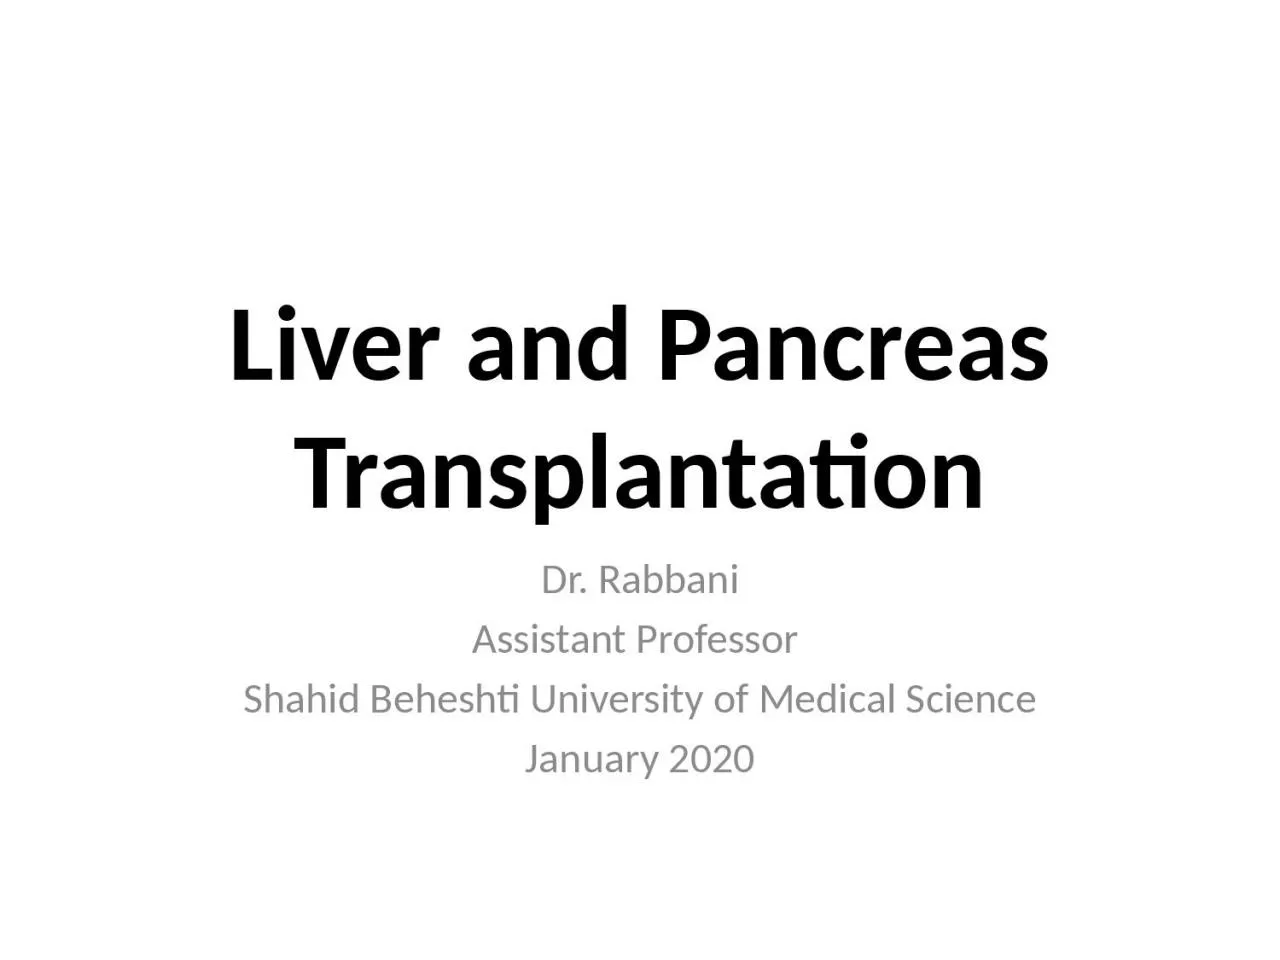 Liver and Pancreas Transplantation